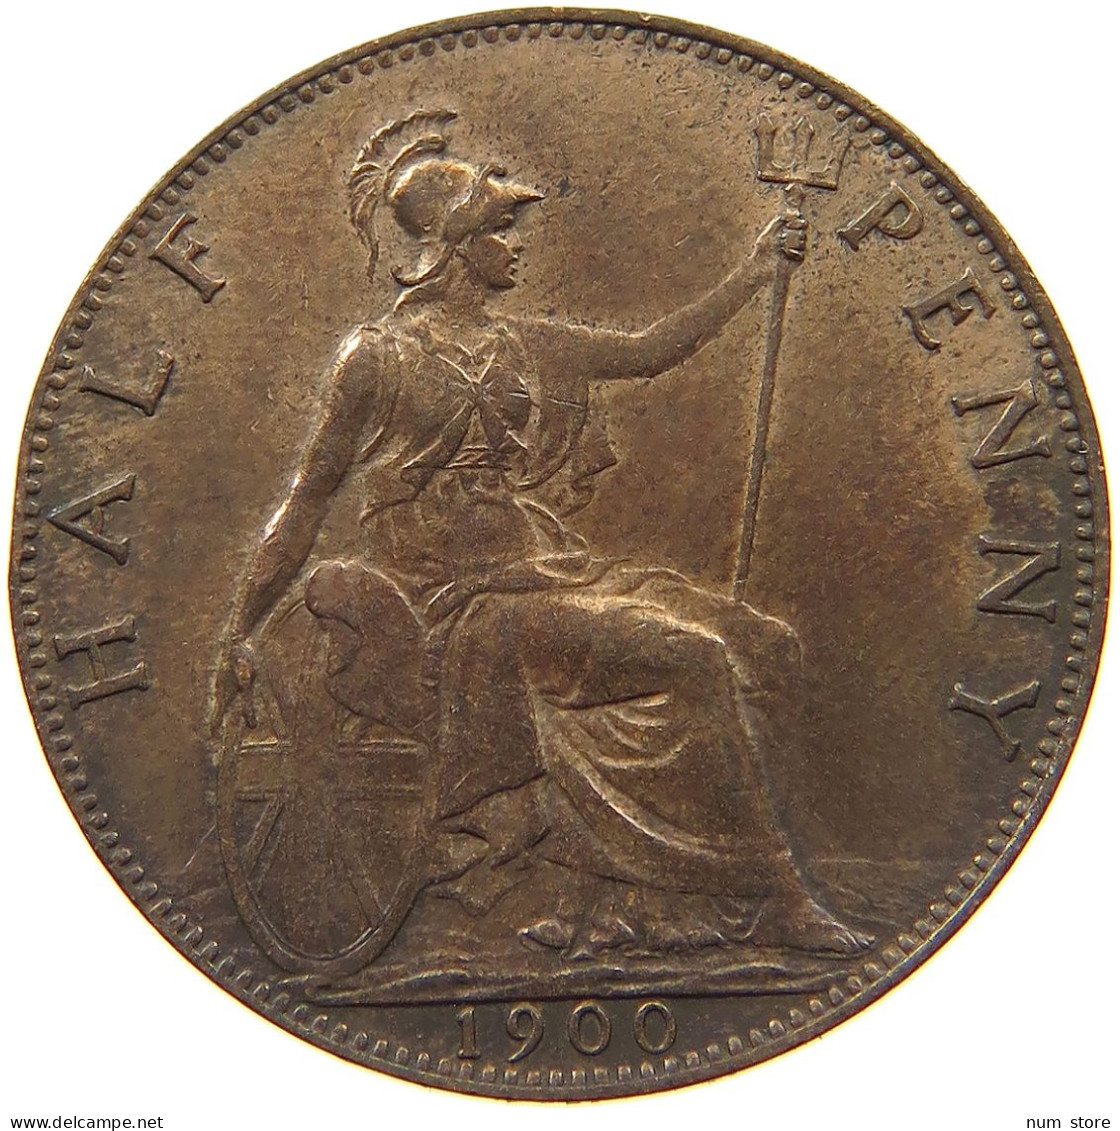 GREAT BRITAIN HALFPENNY 1900 Victoria 1837-1901 #t145 0515 - C. 1/2 Penny